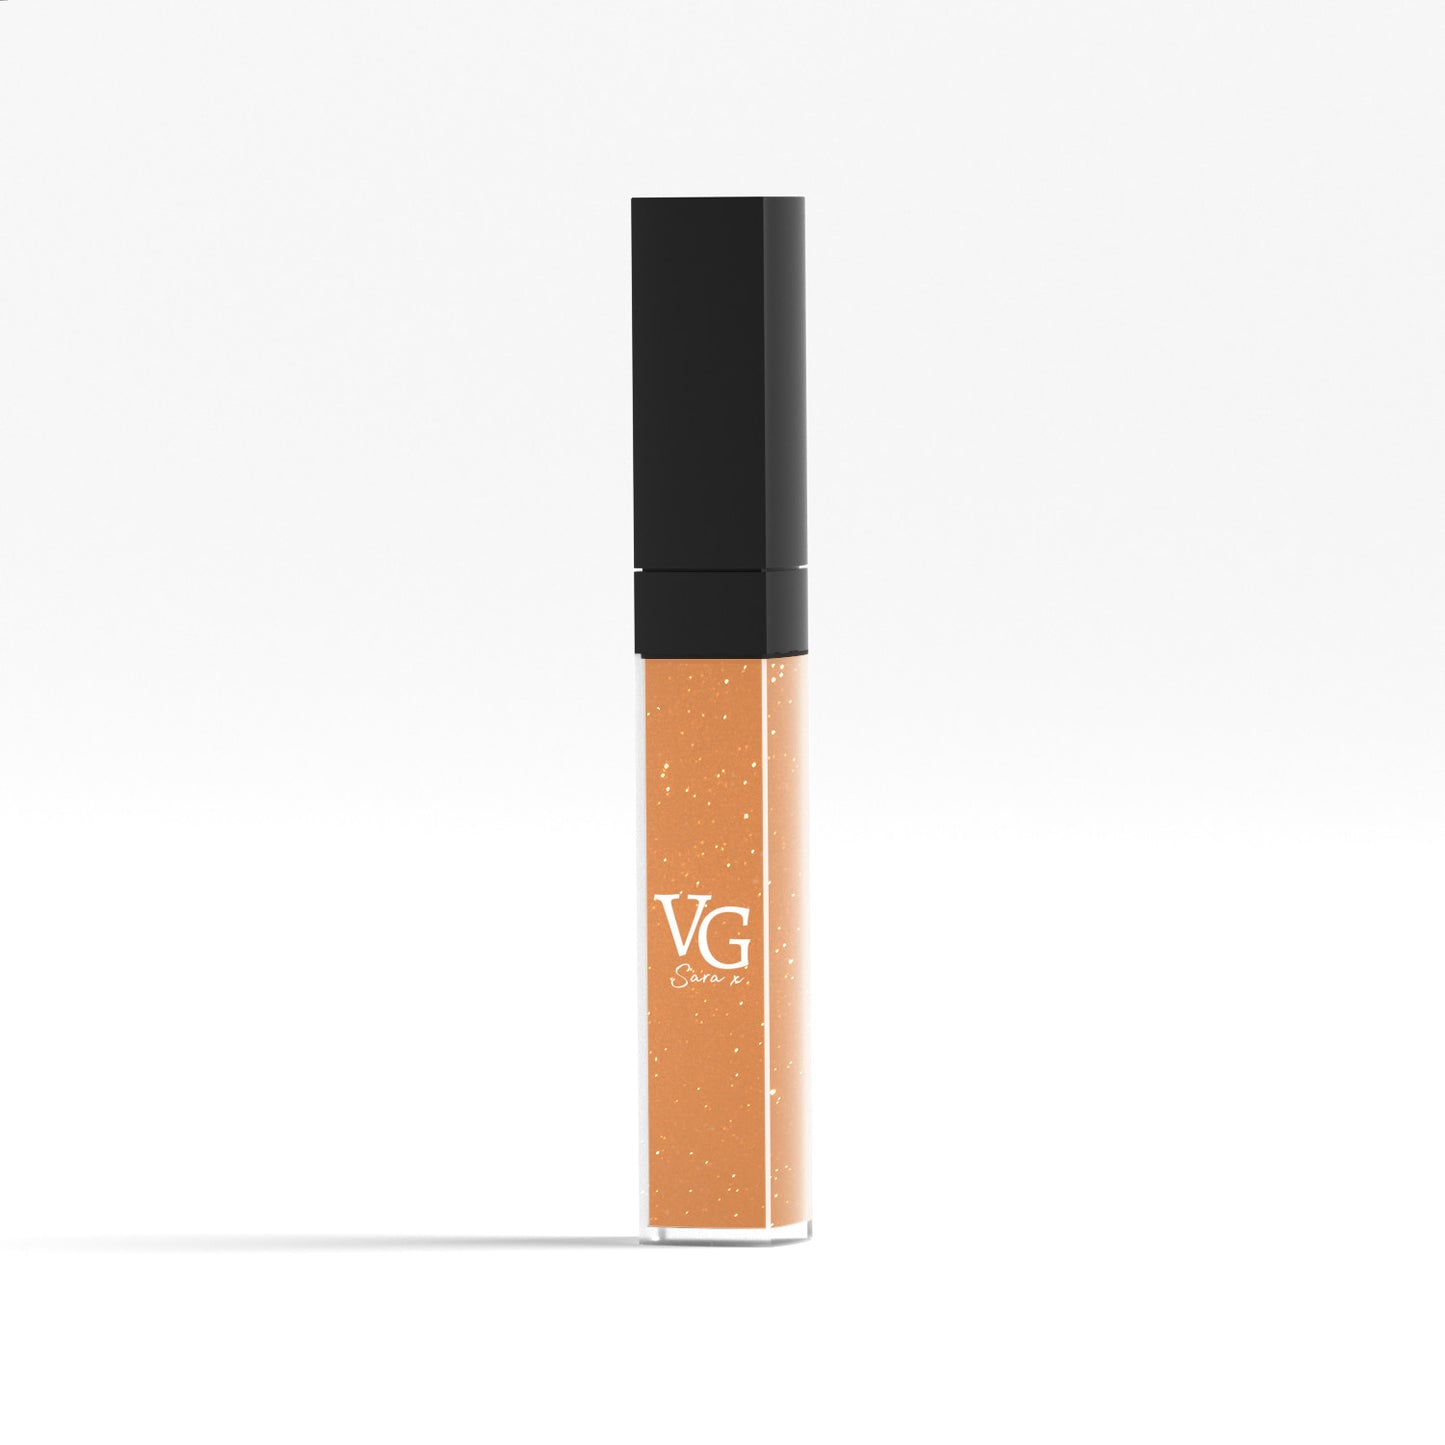 Orange vegan liquid lipstick with VG branding on the tube